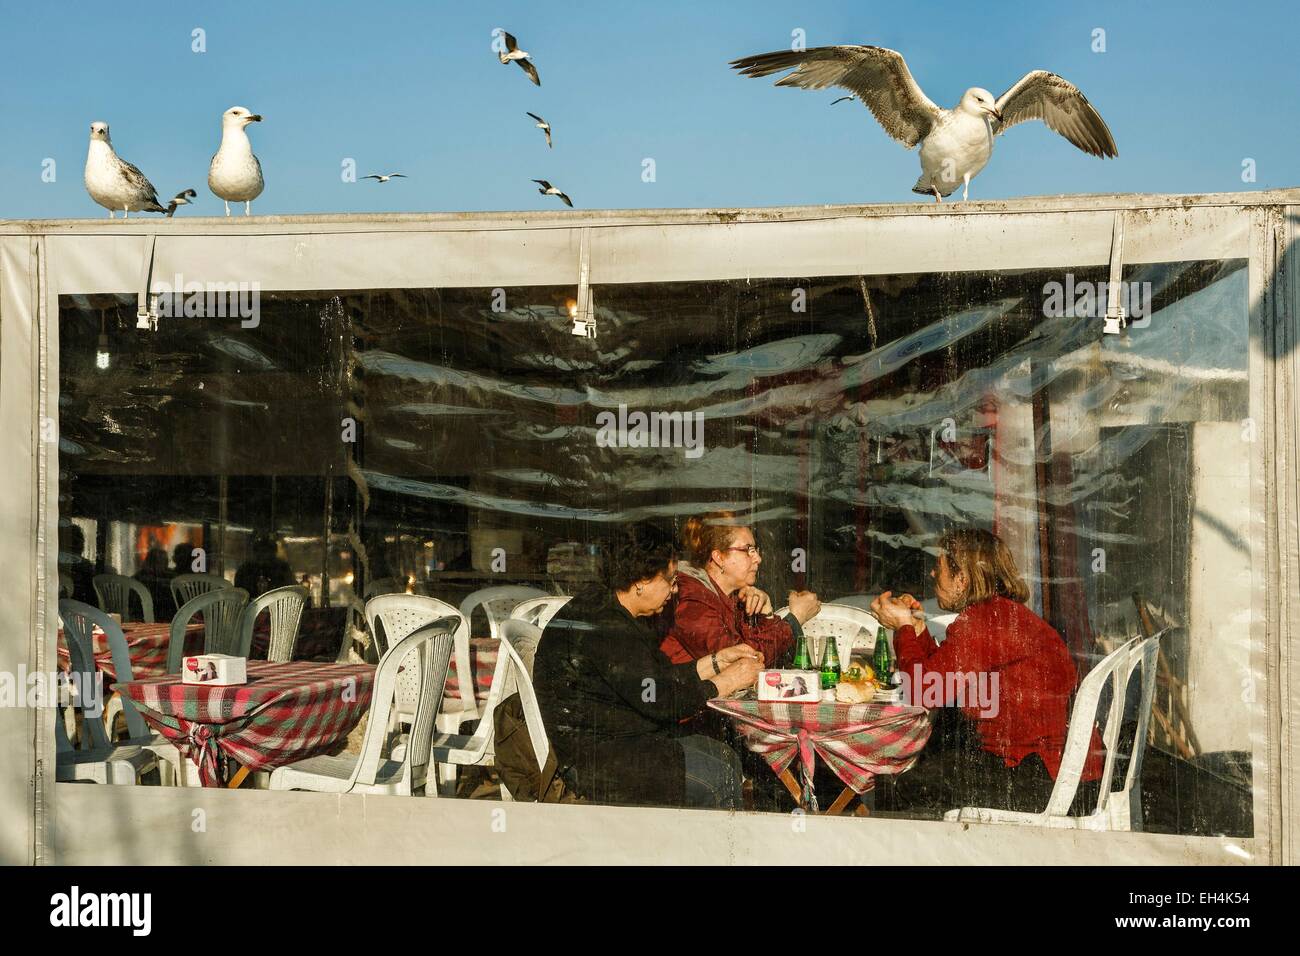 Turkey, Istanbul, Karakoy district, clients in a covered restaurant on the Bosphorus near the Galata Bridge Stock Photo